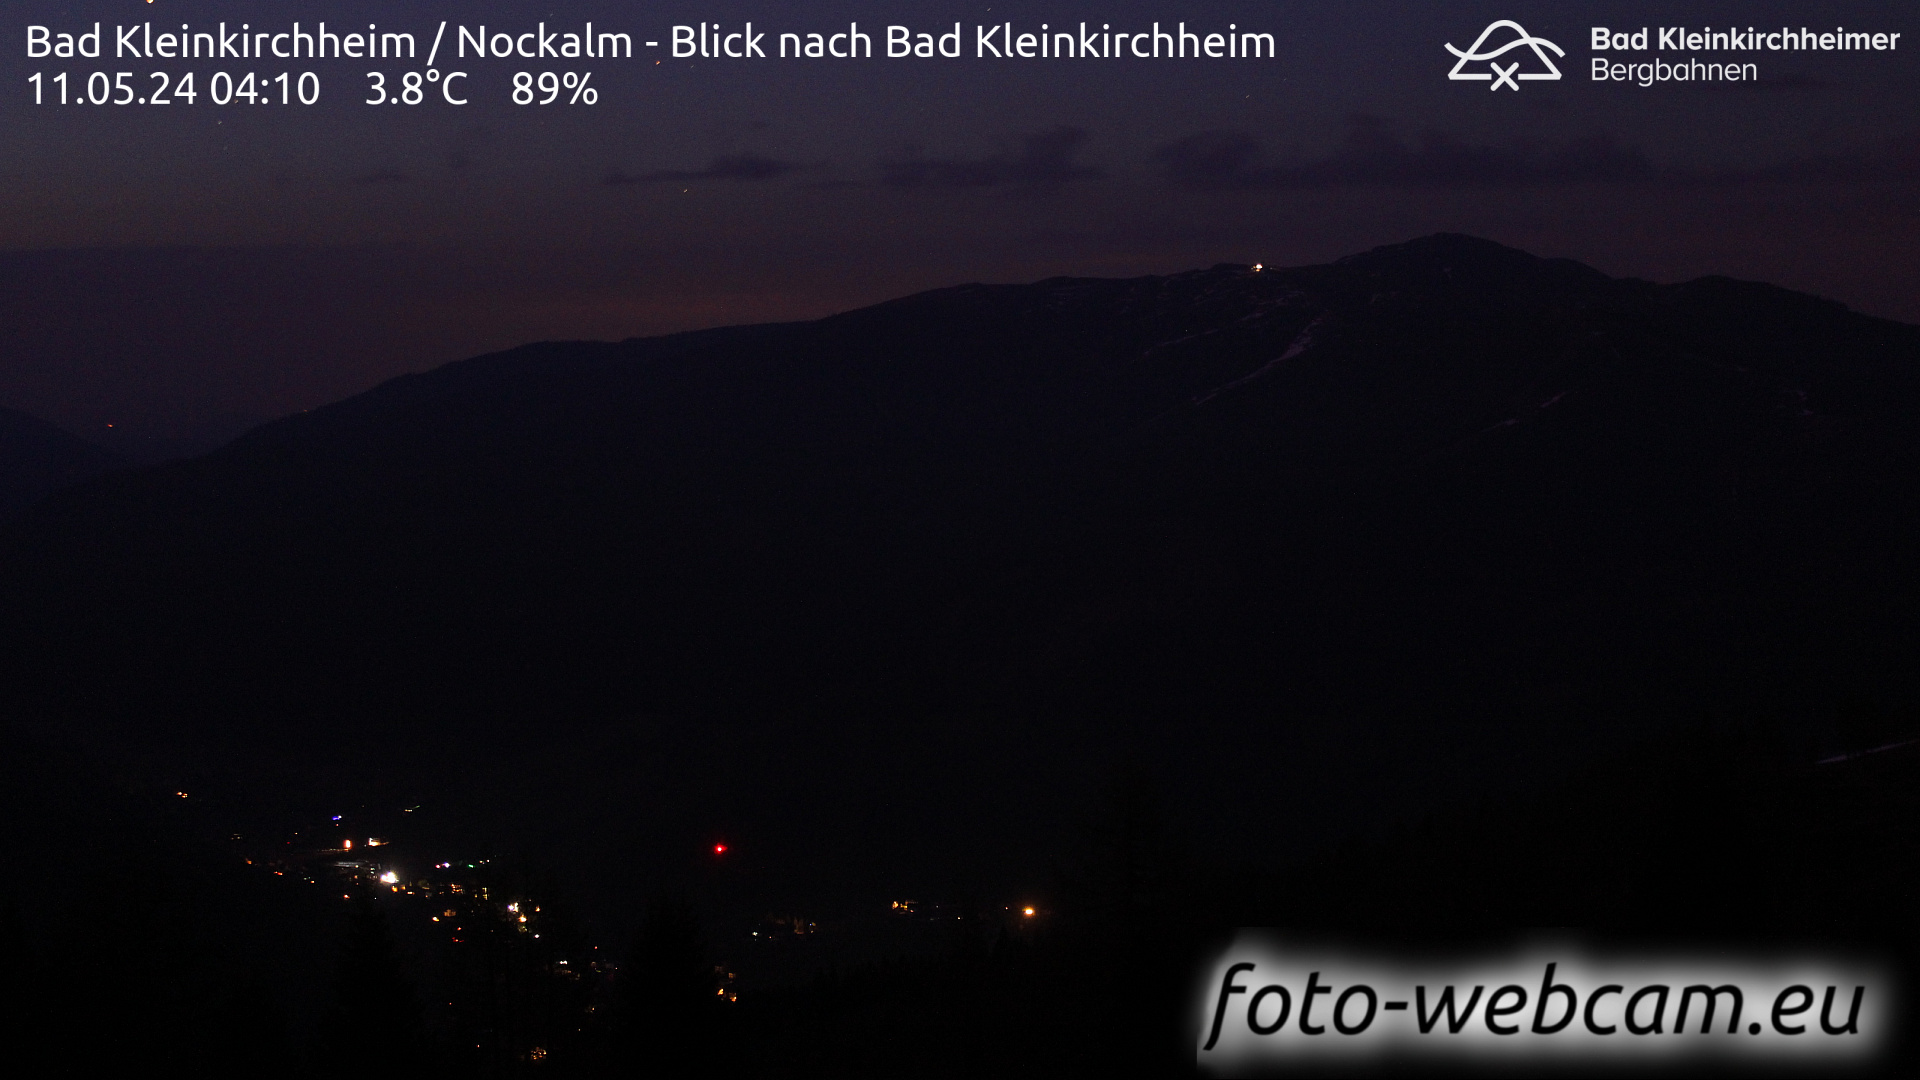 Bad Kleinkirchheim Thu. 04:17